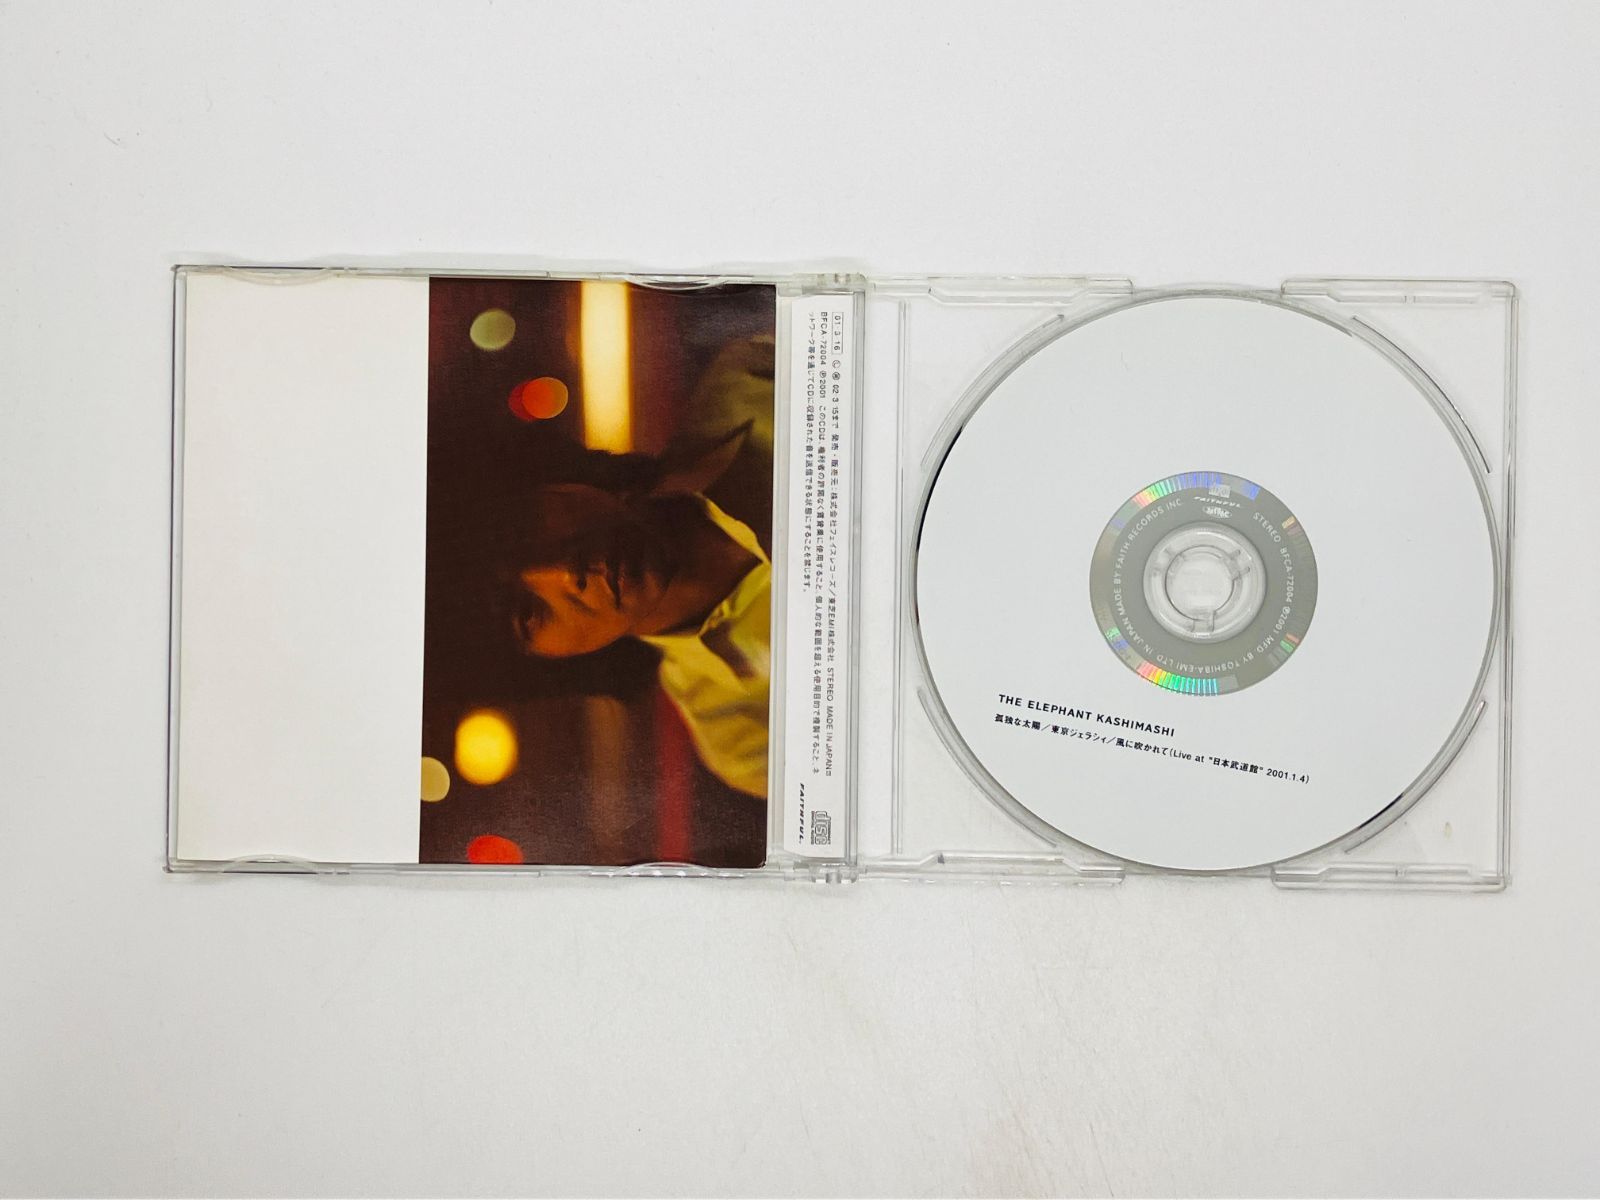 EMIミュージック・ジャパン 即決CD The ELEPHANT KASHIMASHI / エレファントカシマシ / 孤独な太陽 / 帯付き BFCA 72004 Y24